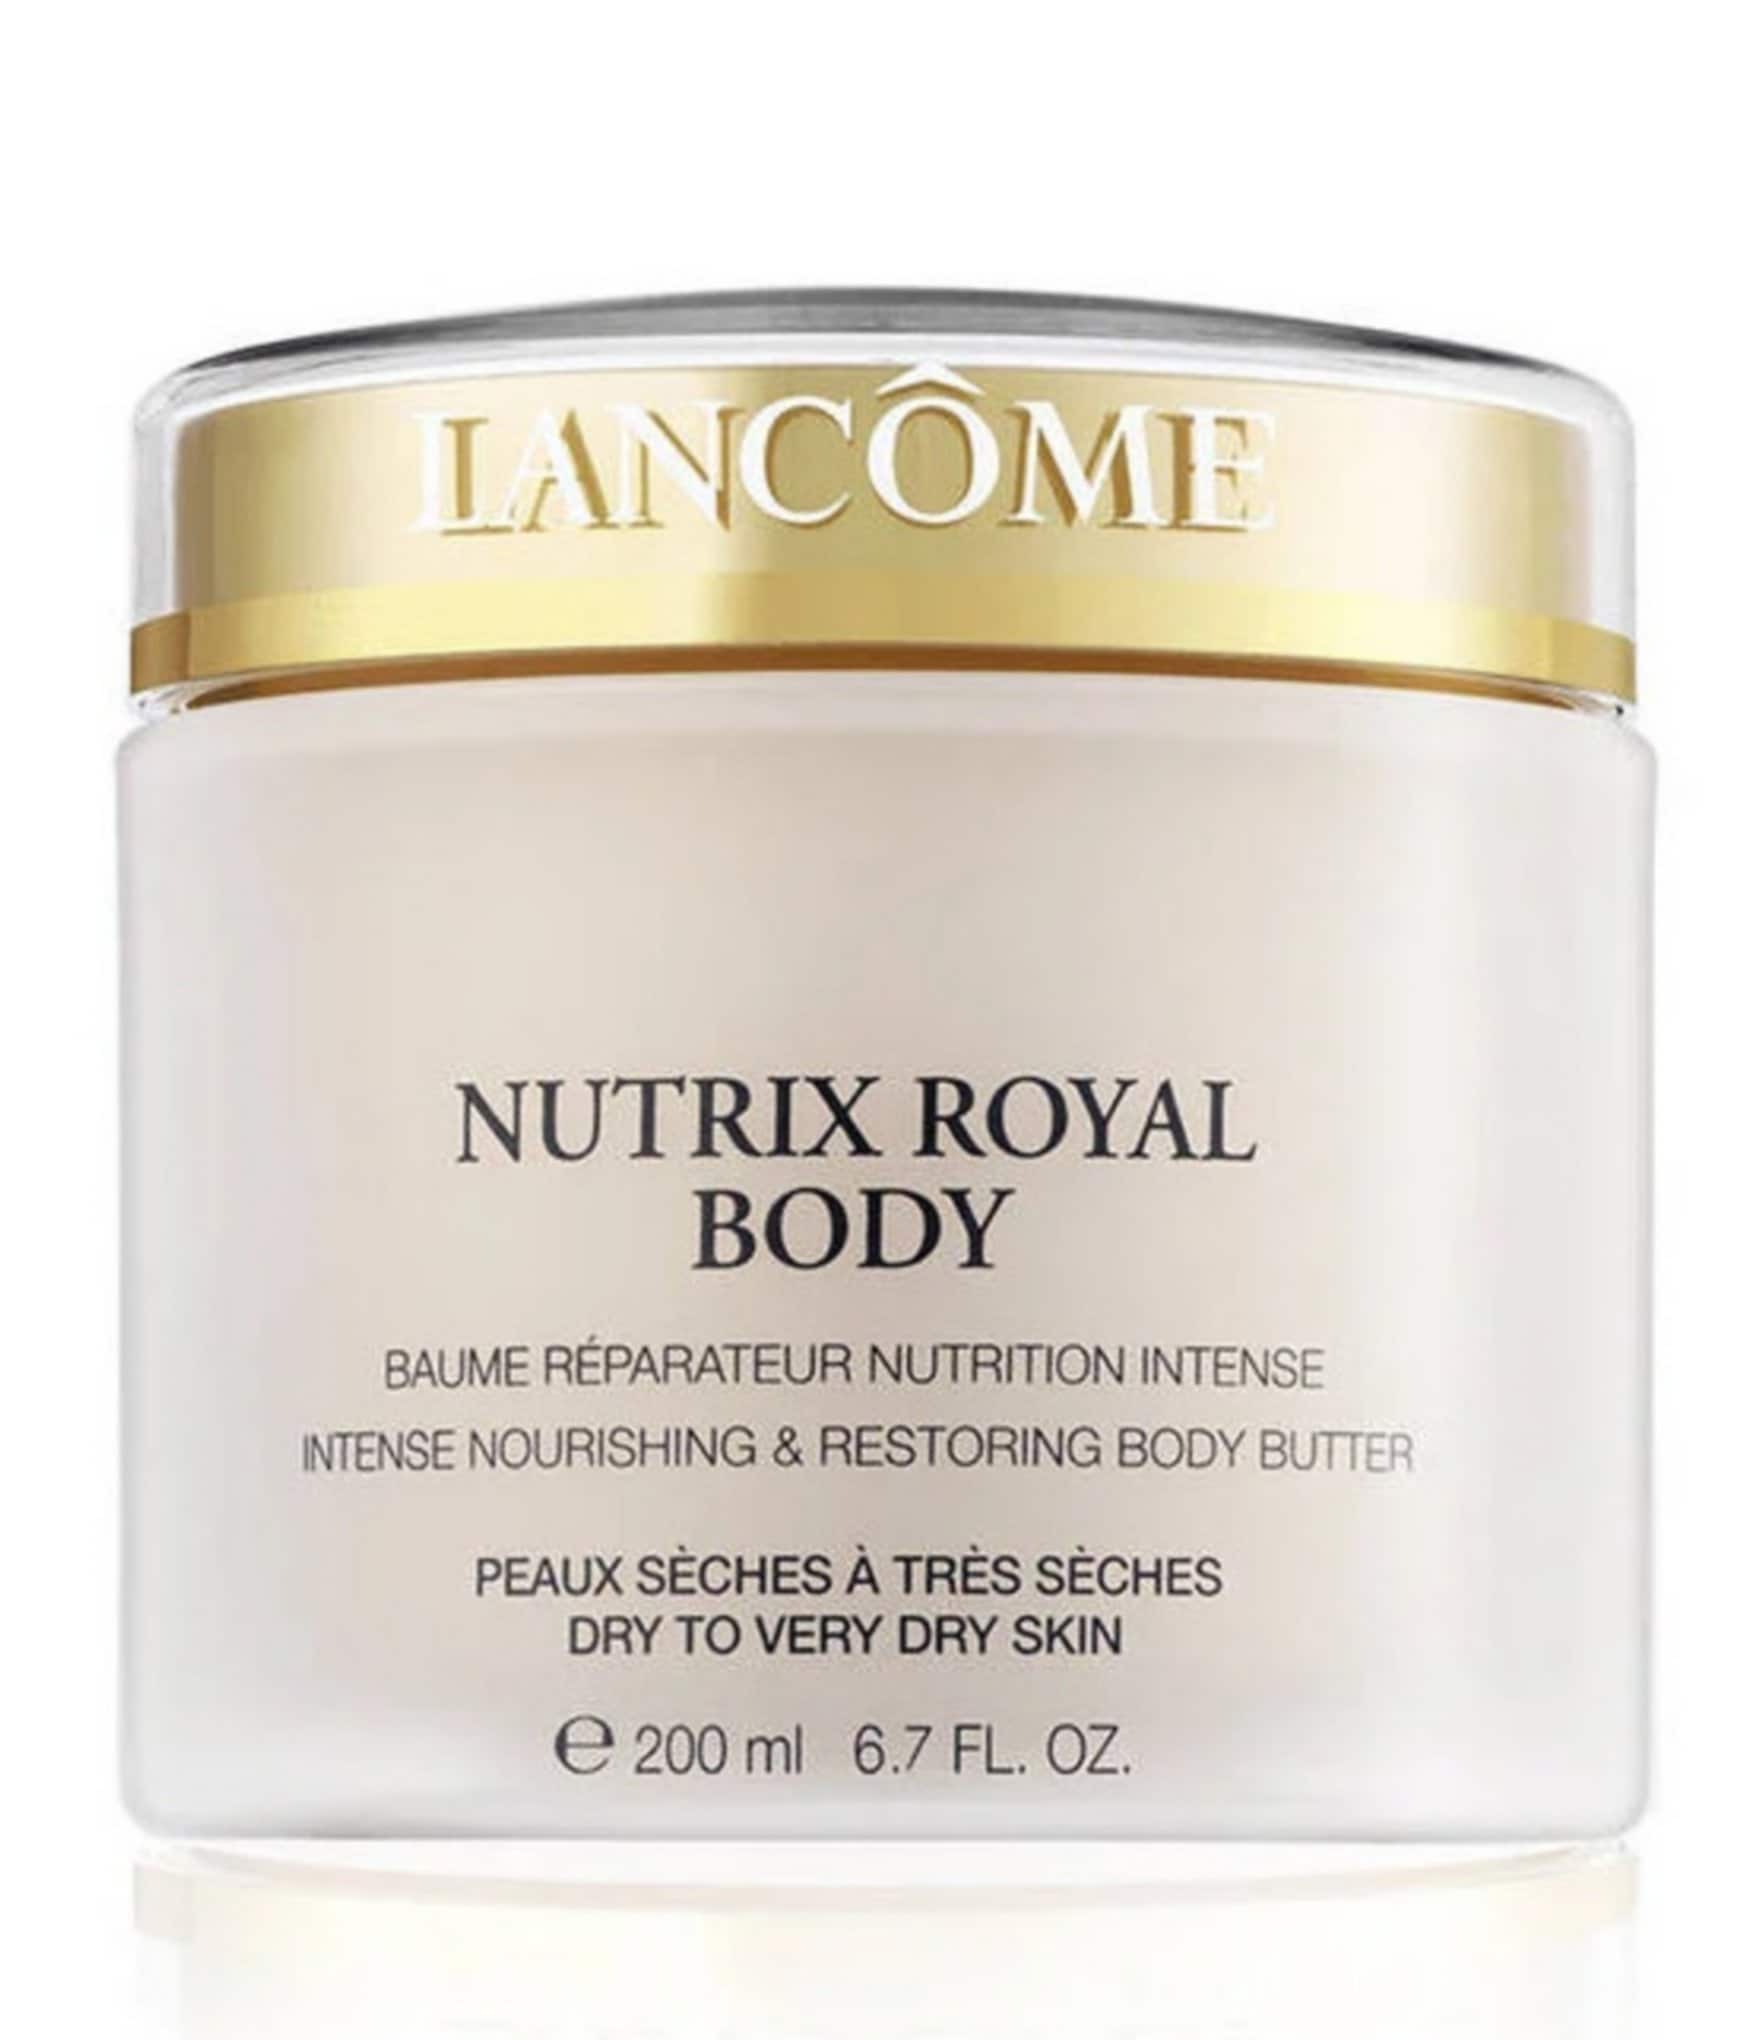 Nutrix Jumbo Lancome Cream | Body Dillard\'s Royal